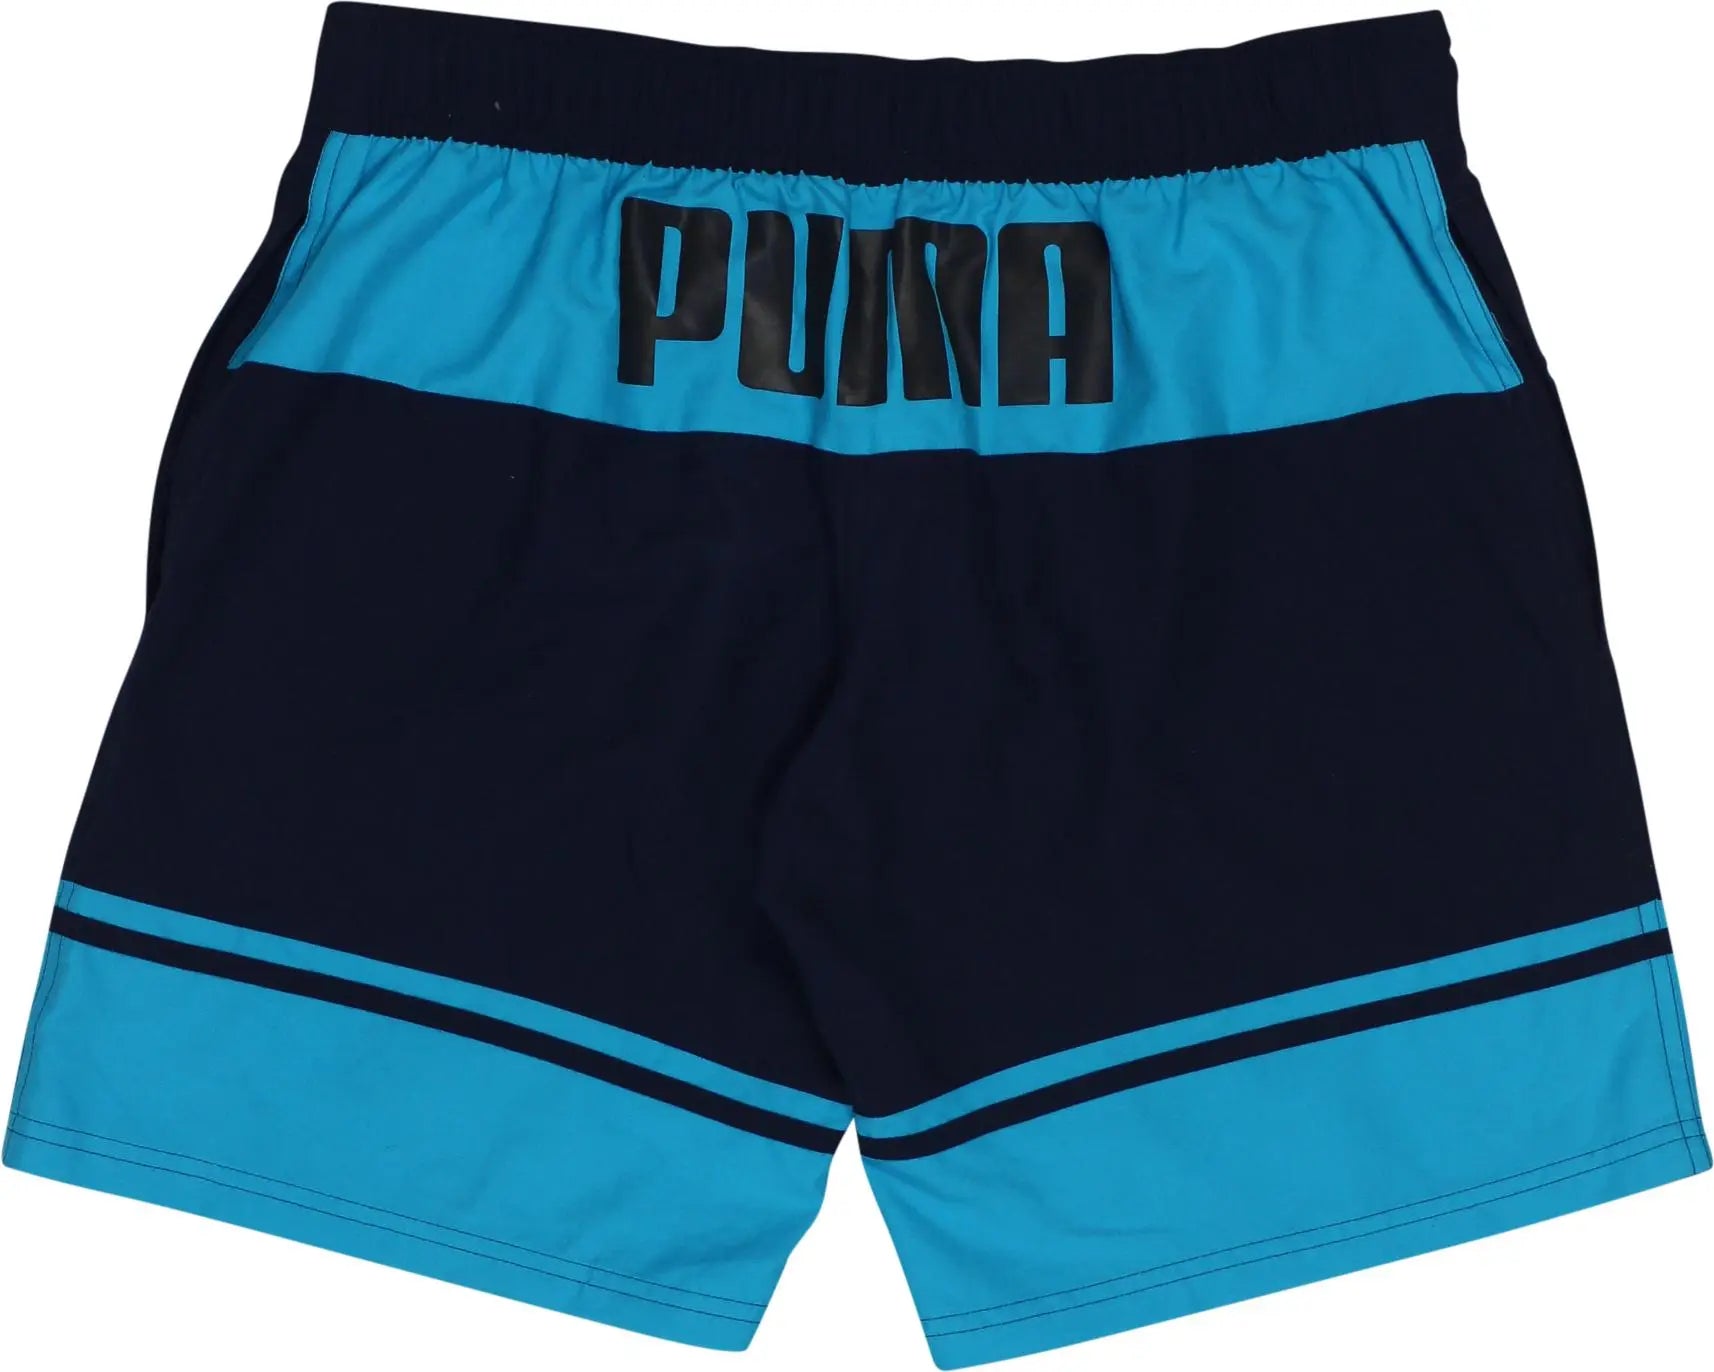 Puma - Swim Shorts- ThriftTale.com - Vintage and second handclothing